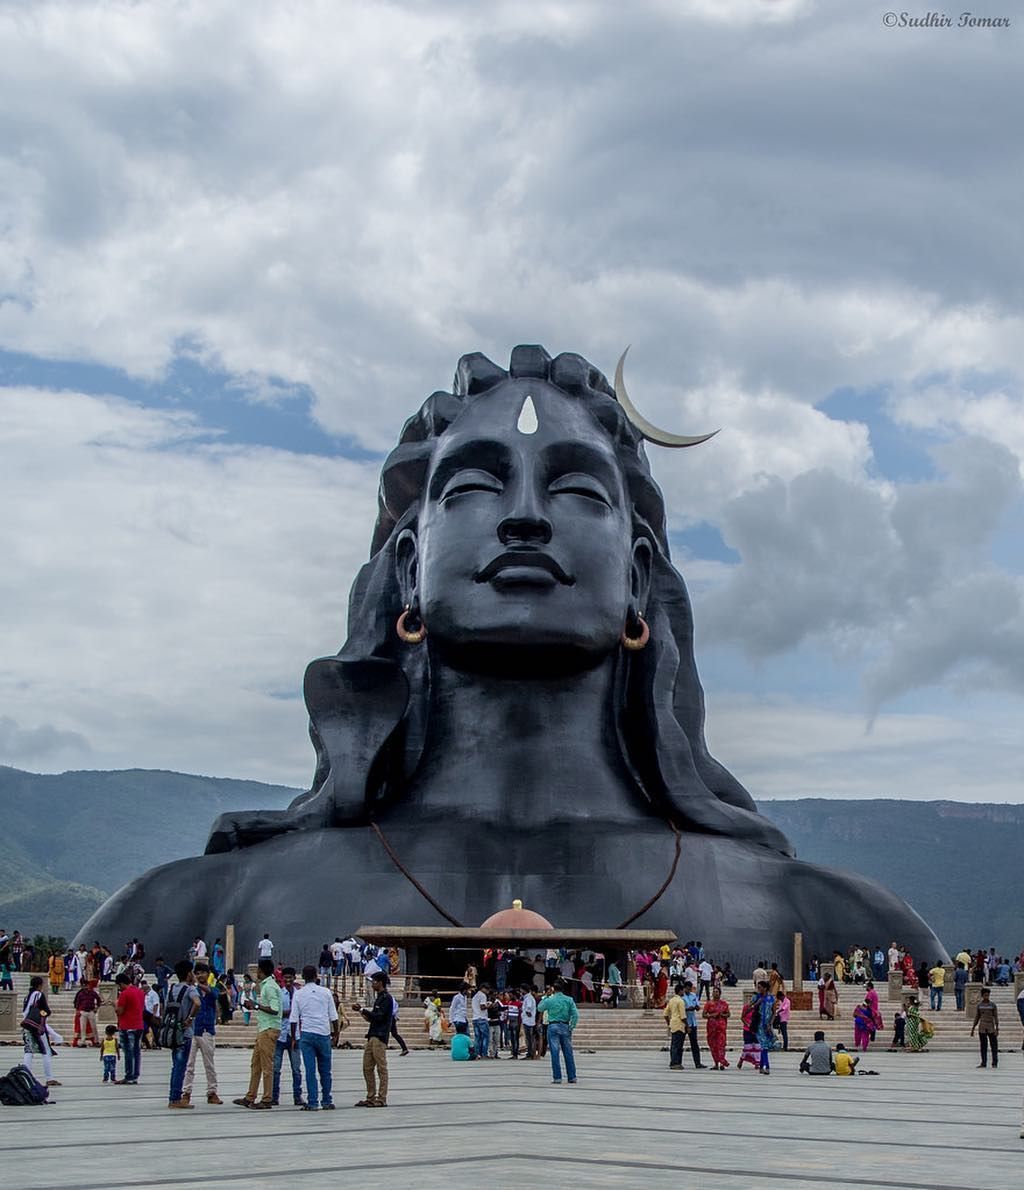 Coimbatore Adiyogi Shiva statue. Photography subjects, Beautiful wallpaper background, Shiva statue